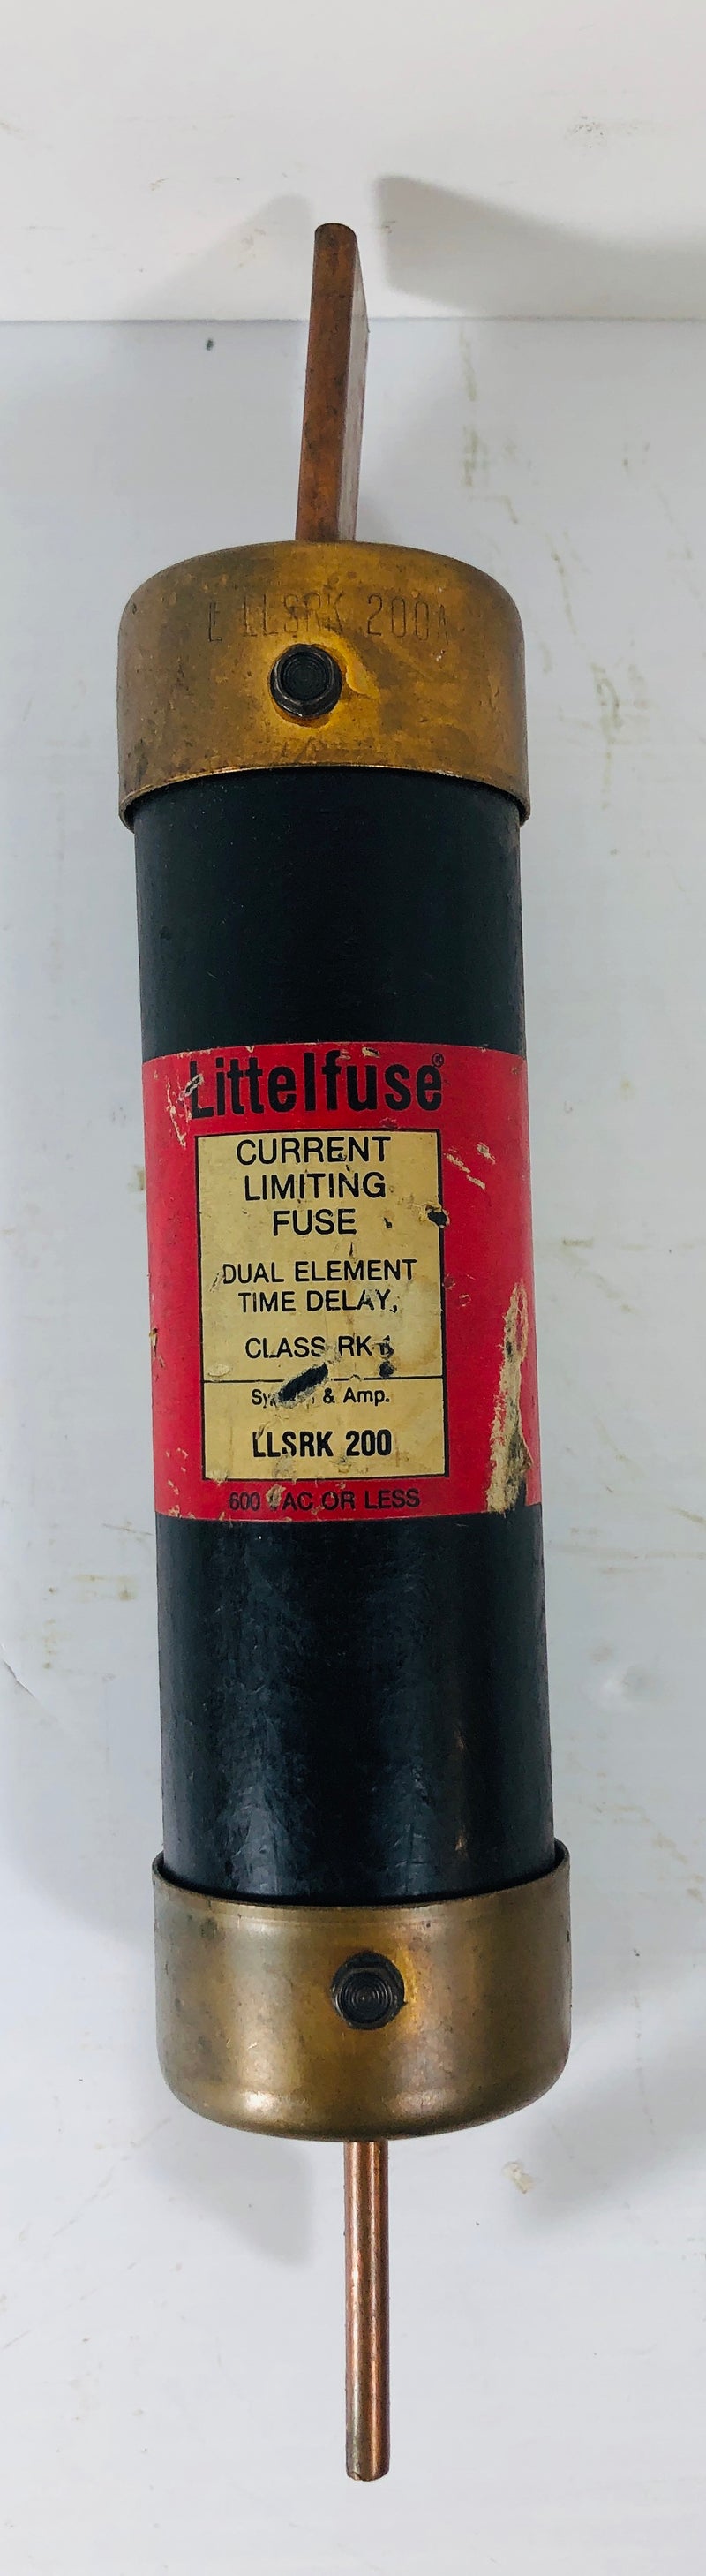 Littelfuse Current Limiting Fuse Class RK LLSRK 200